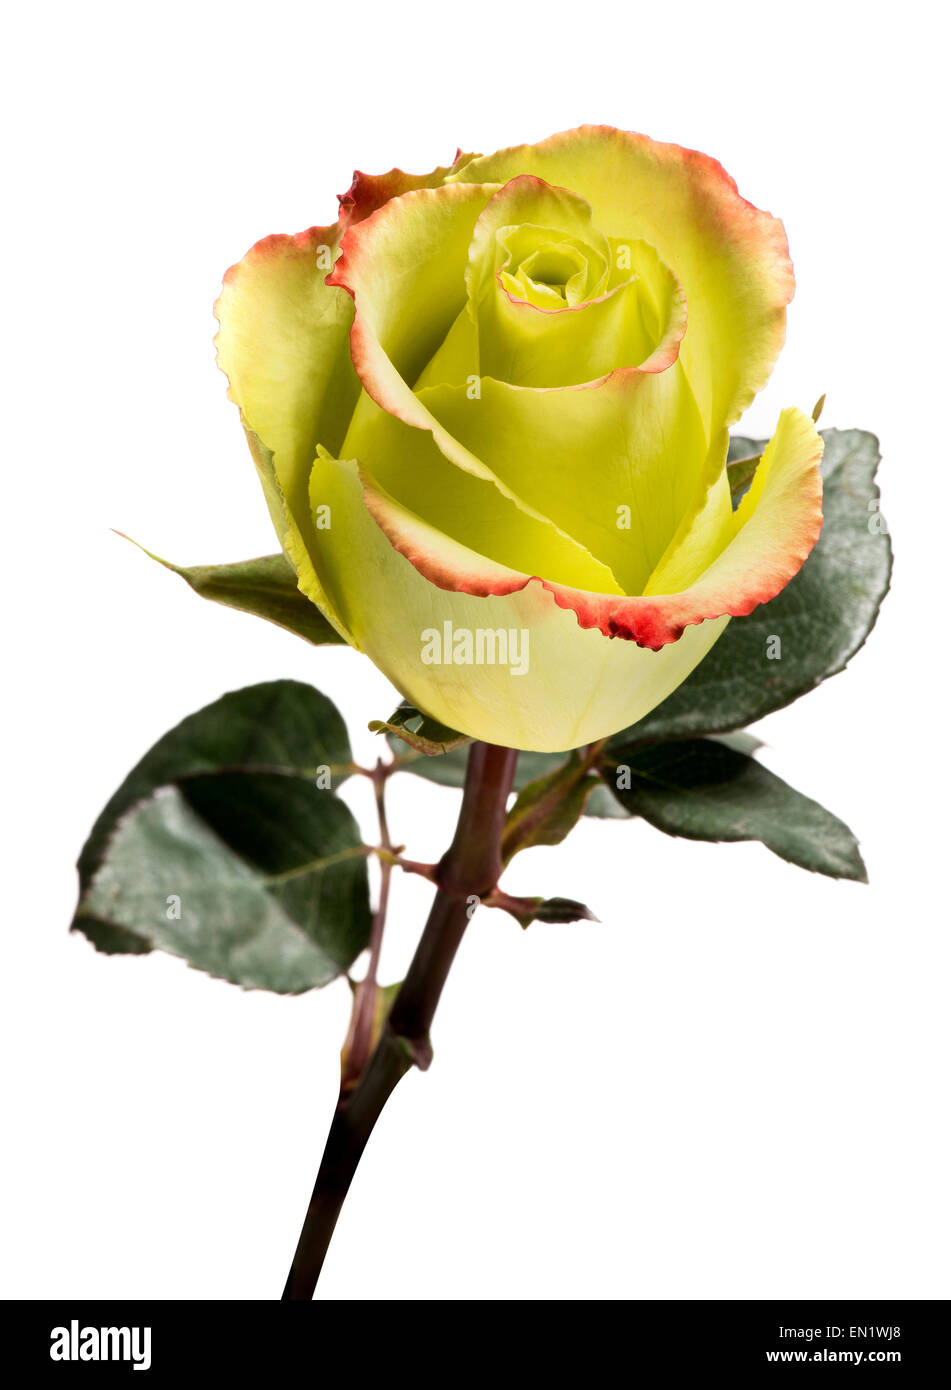 Close Up of Romantic Single Yellow Rose Stock Photo